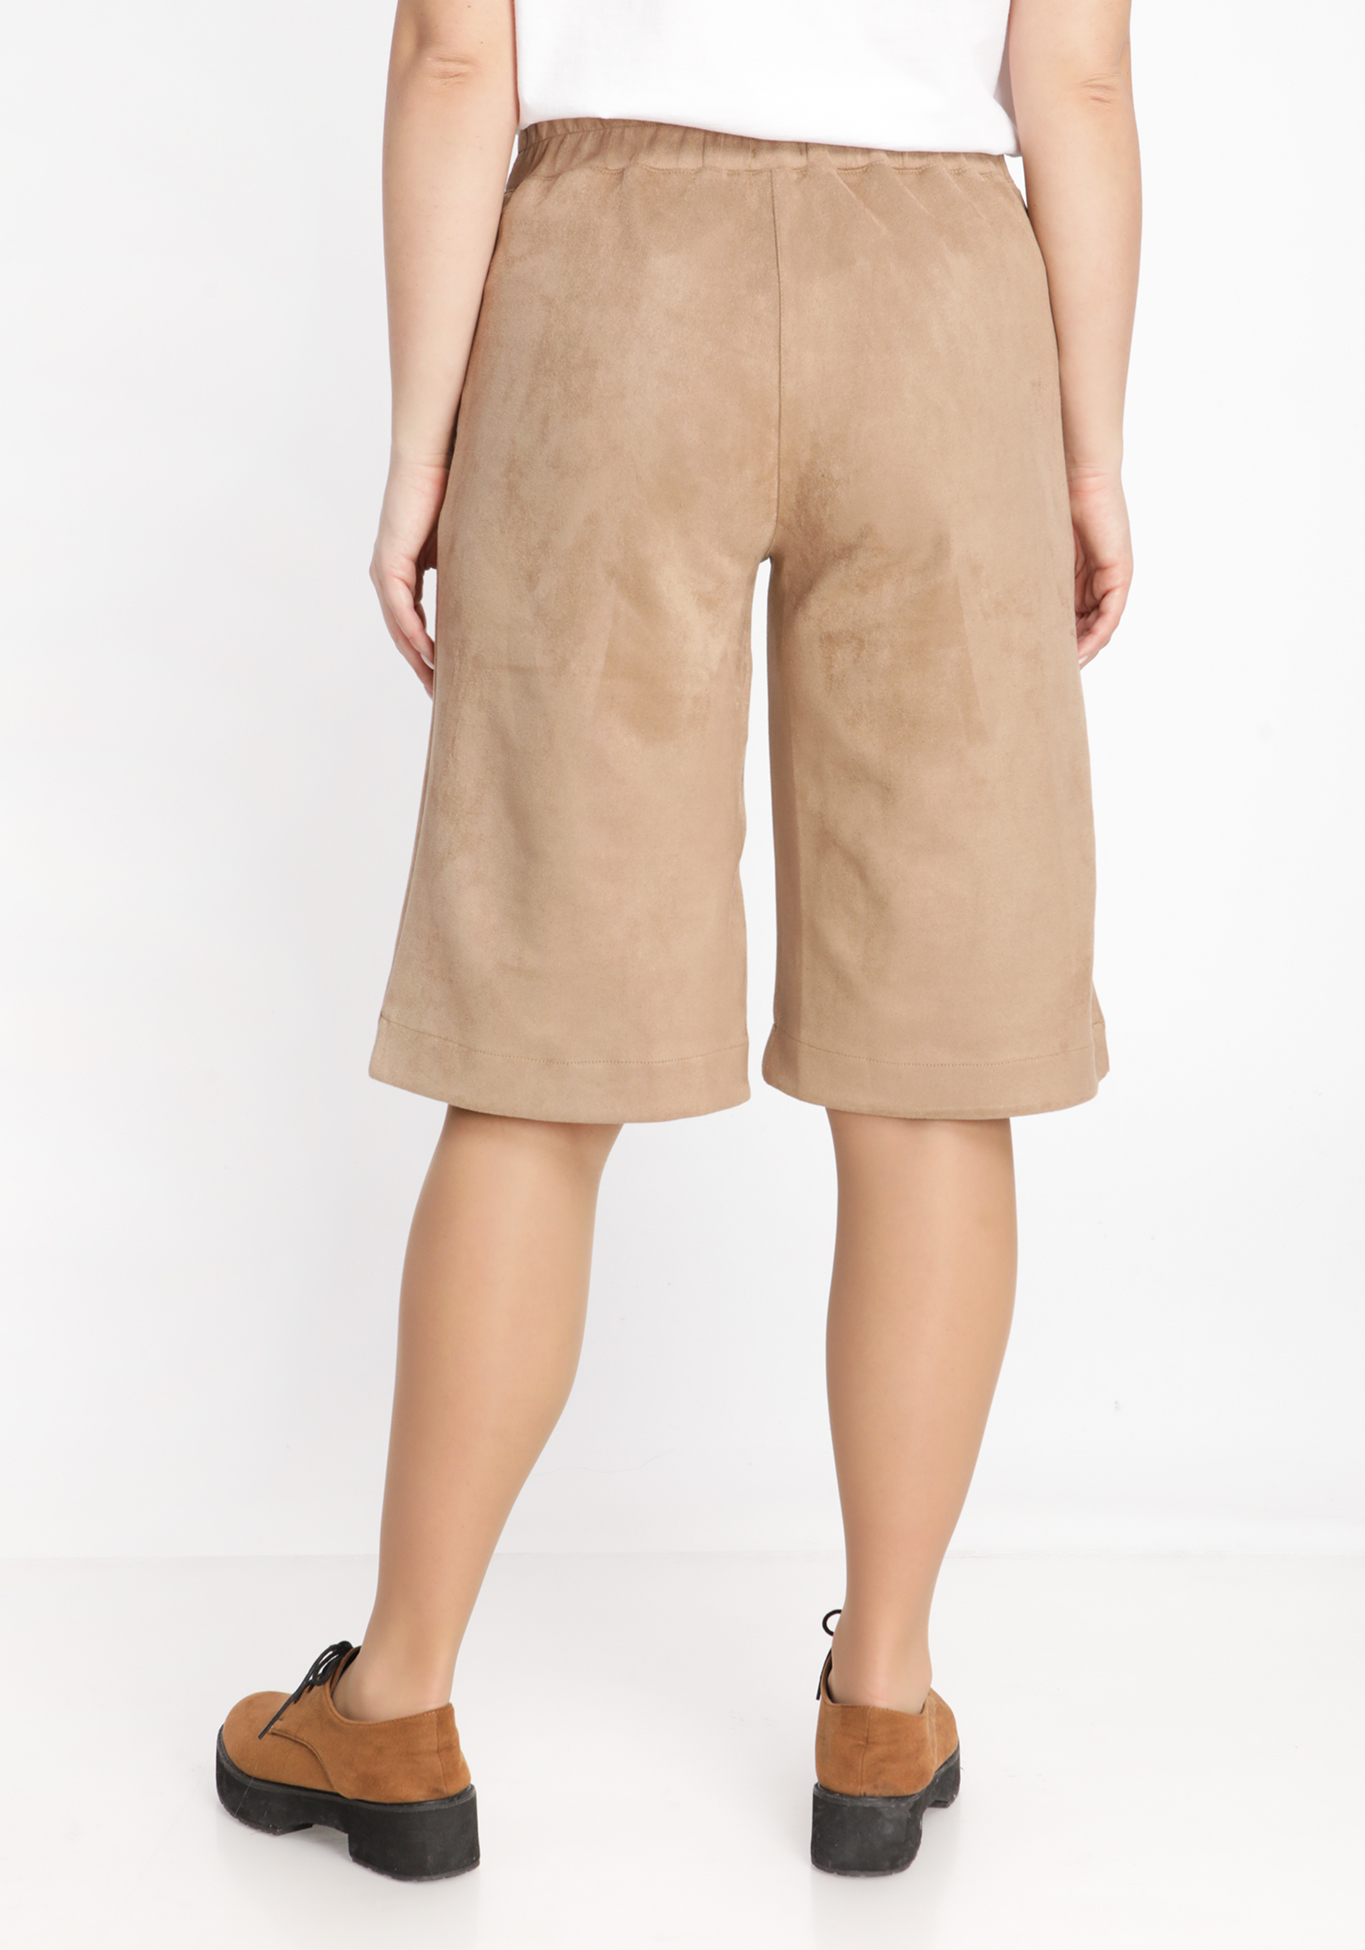 Шорты женские ниже колена из эко-замши Star Fashion, размер 50, цвет бежевый - фото 2